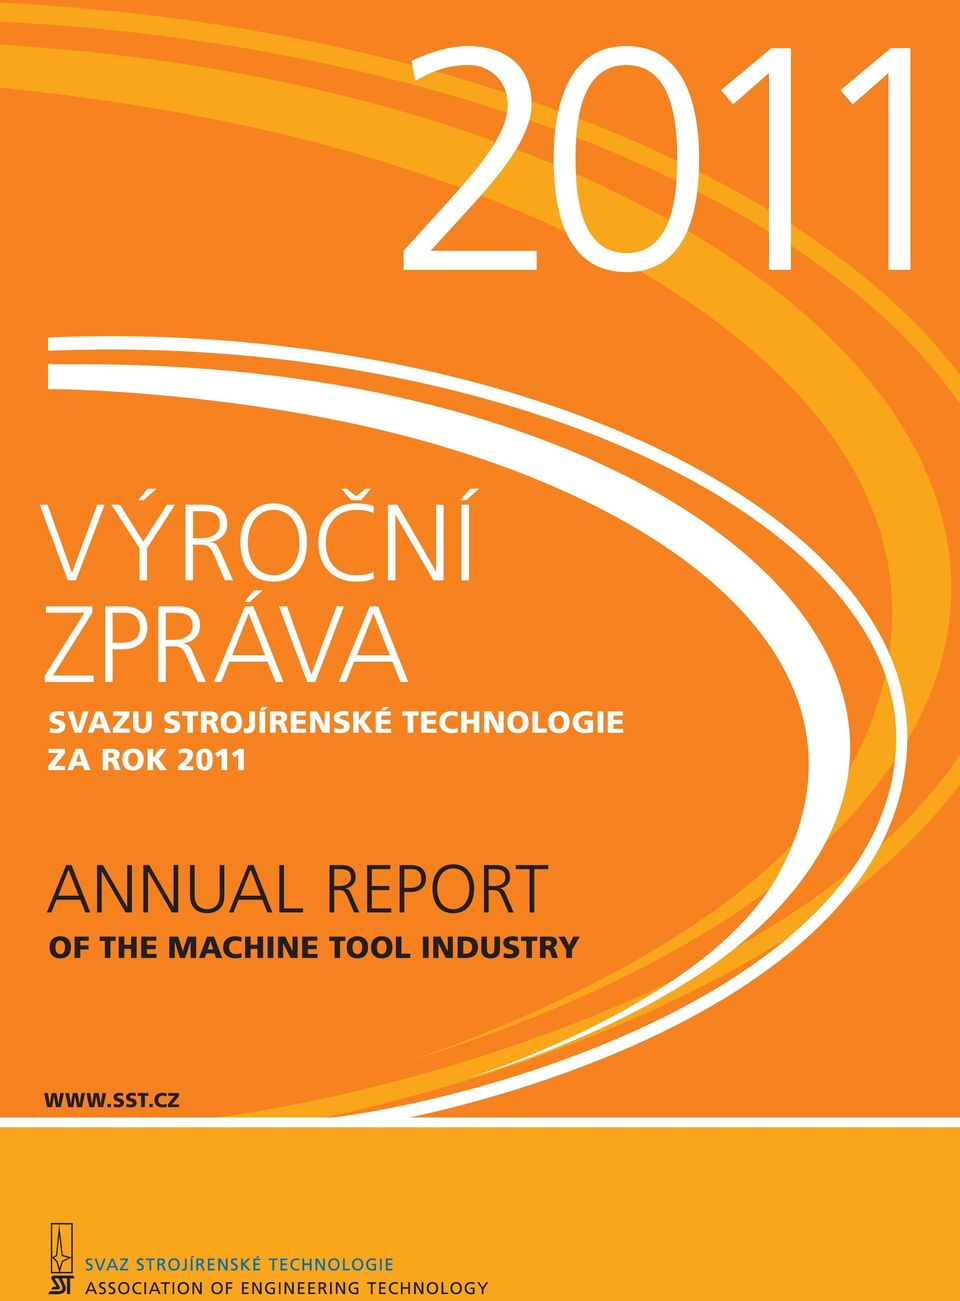 rok 2011 Annual report of